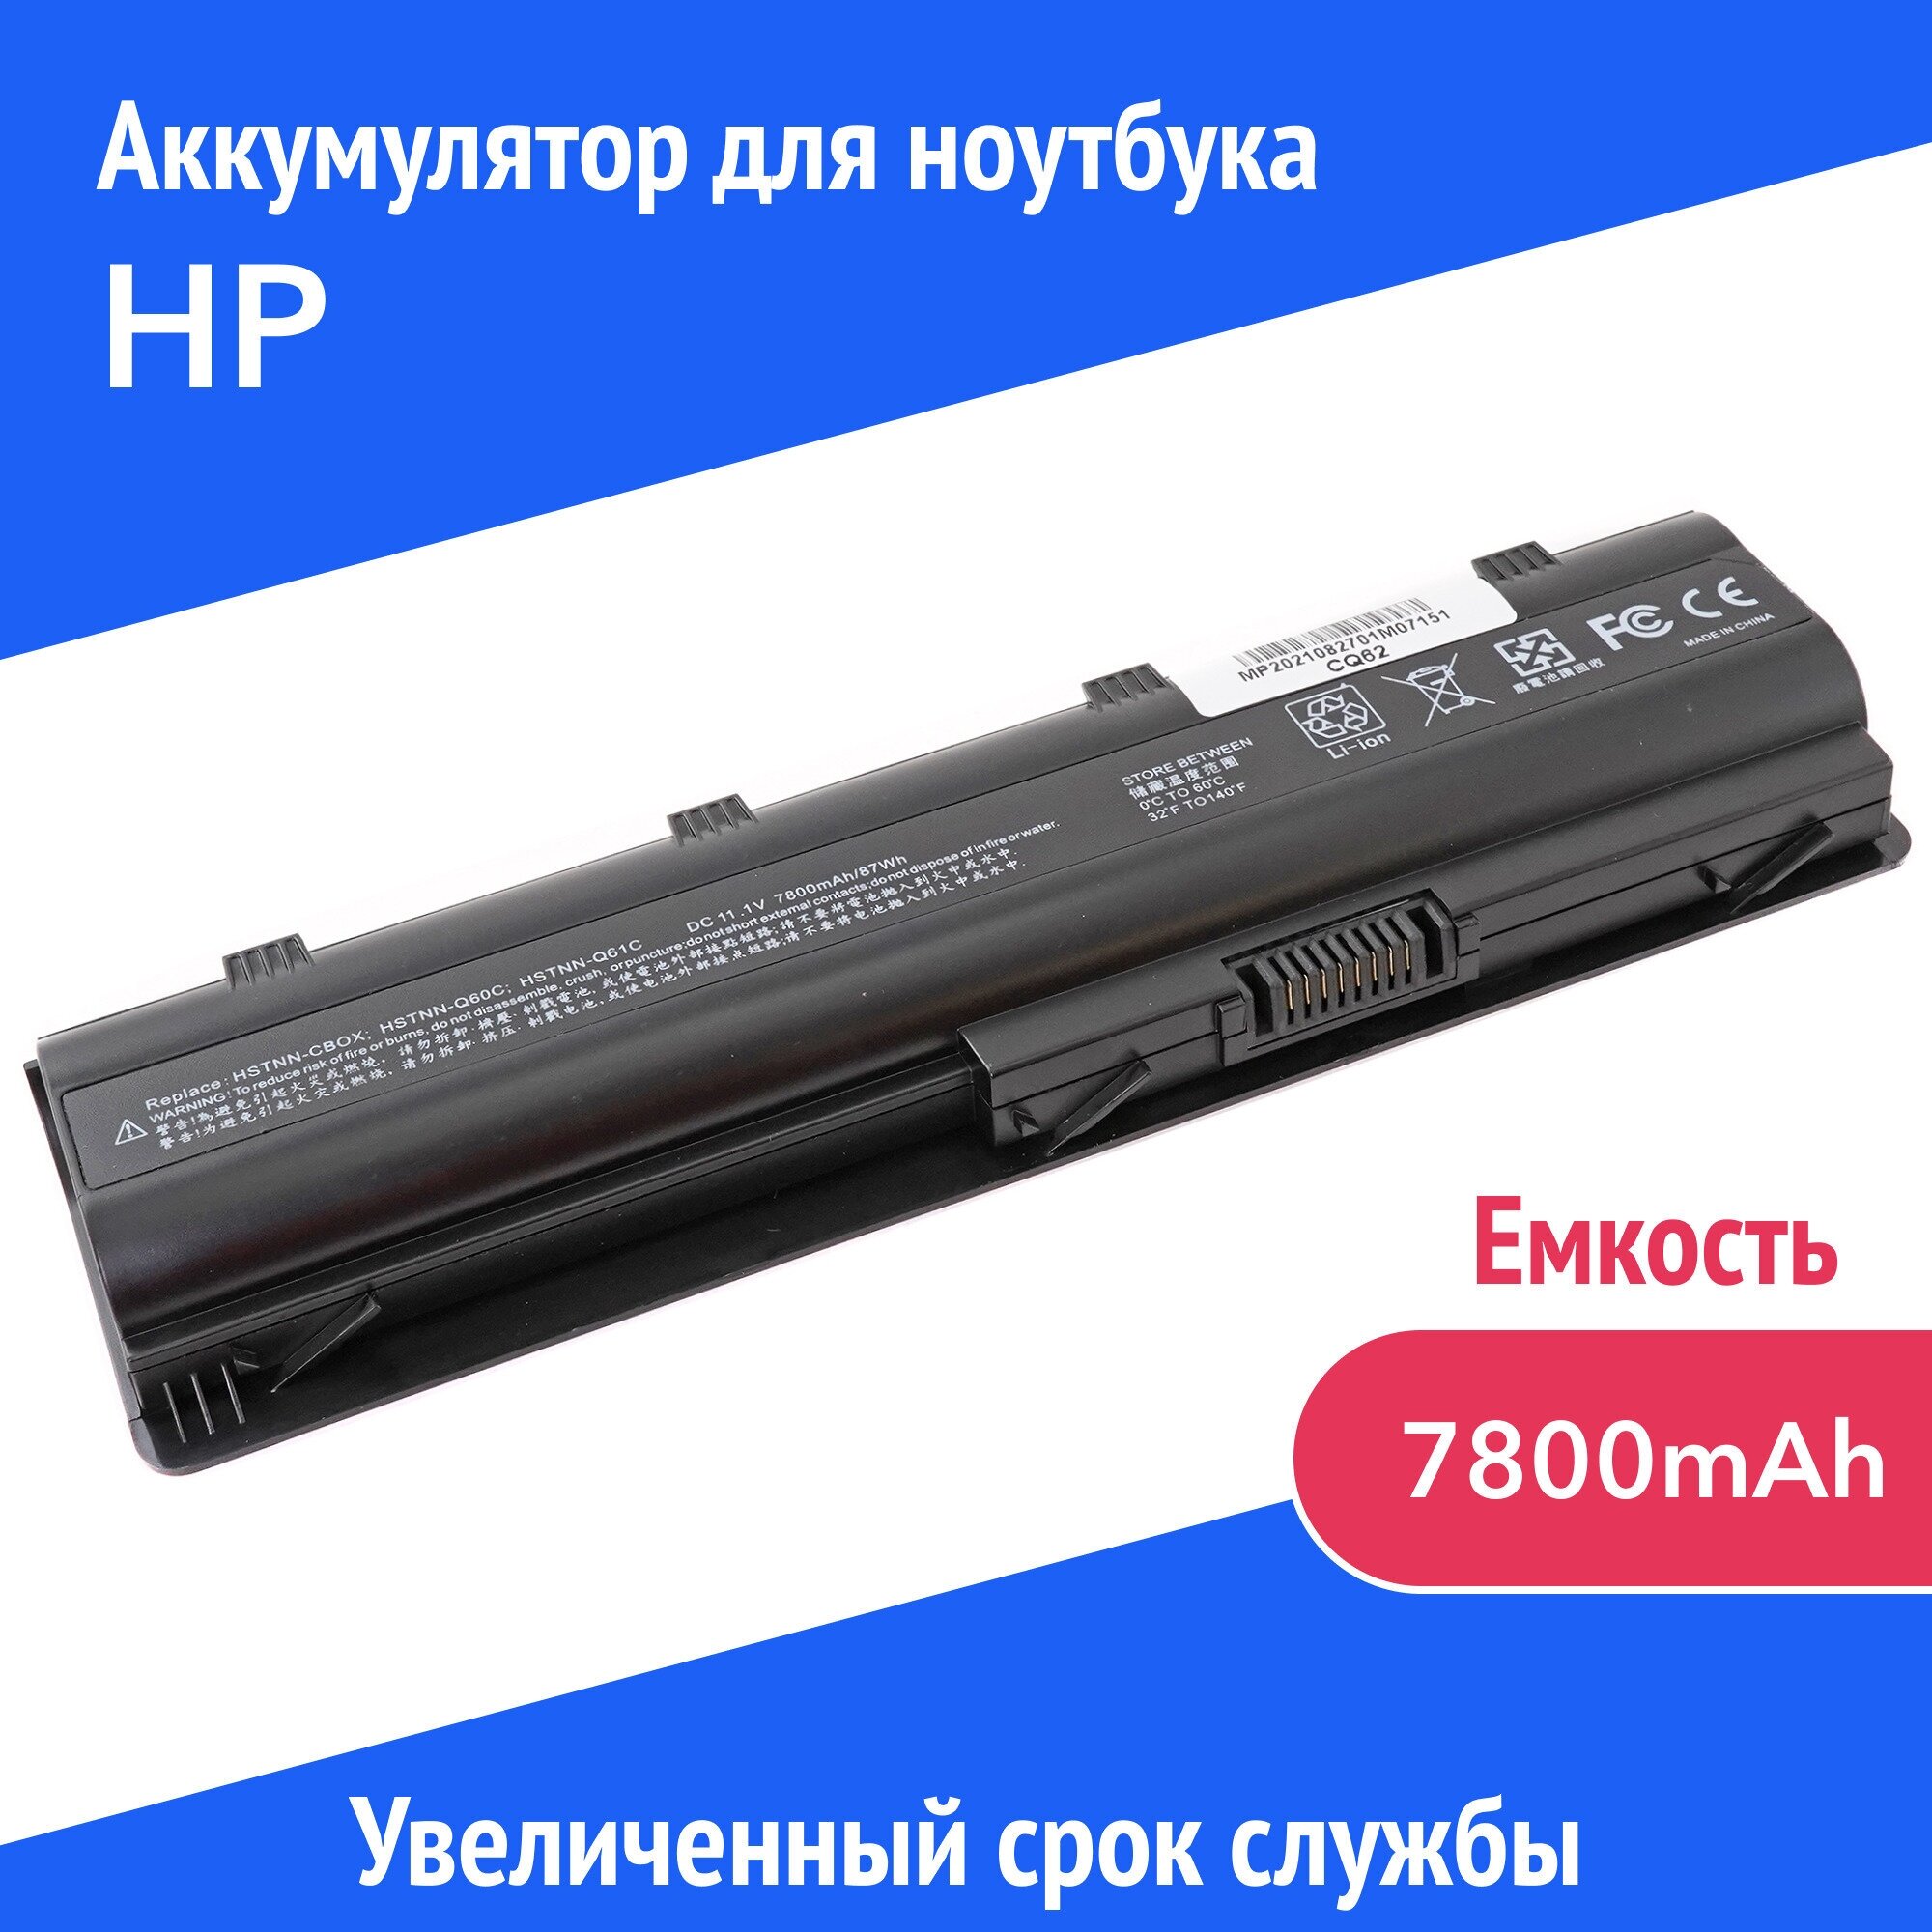 Аккумулятор MU09 для HP G56 / CQ62 / dv6-3000 (MU09XL, WD548AA) 7800mAh